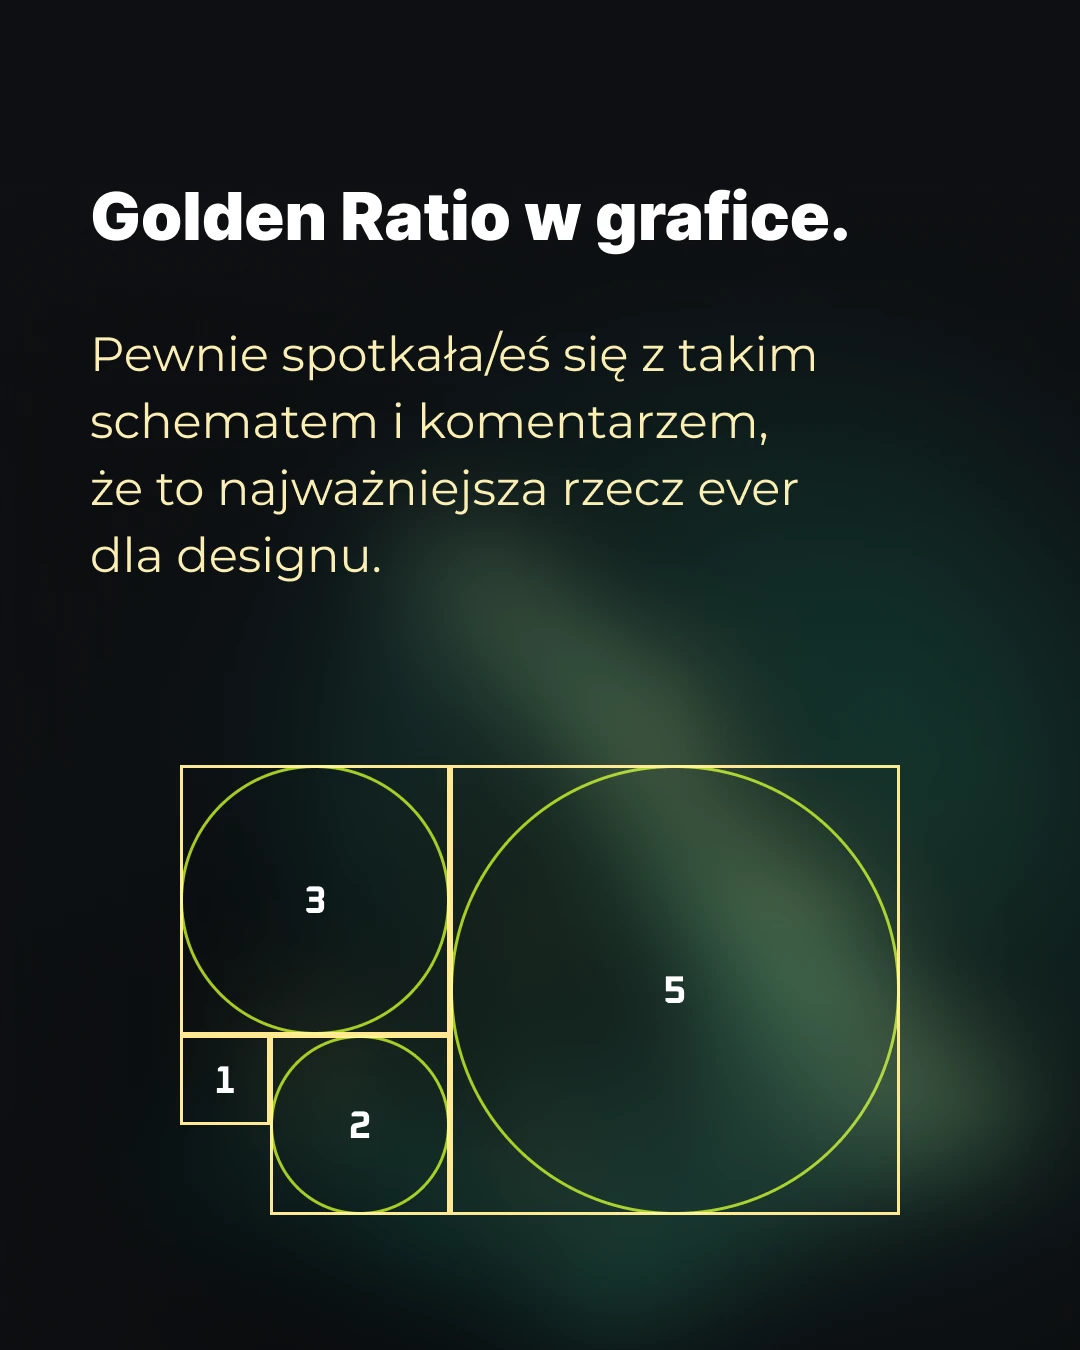 Co to jest Golden Ratio?